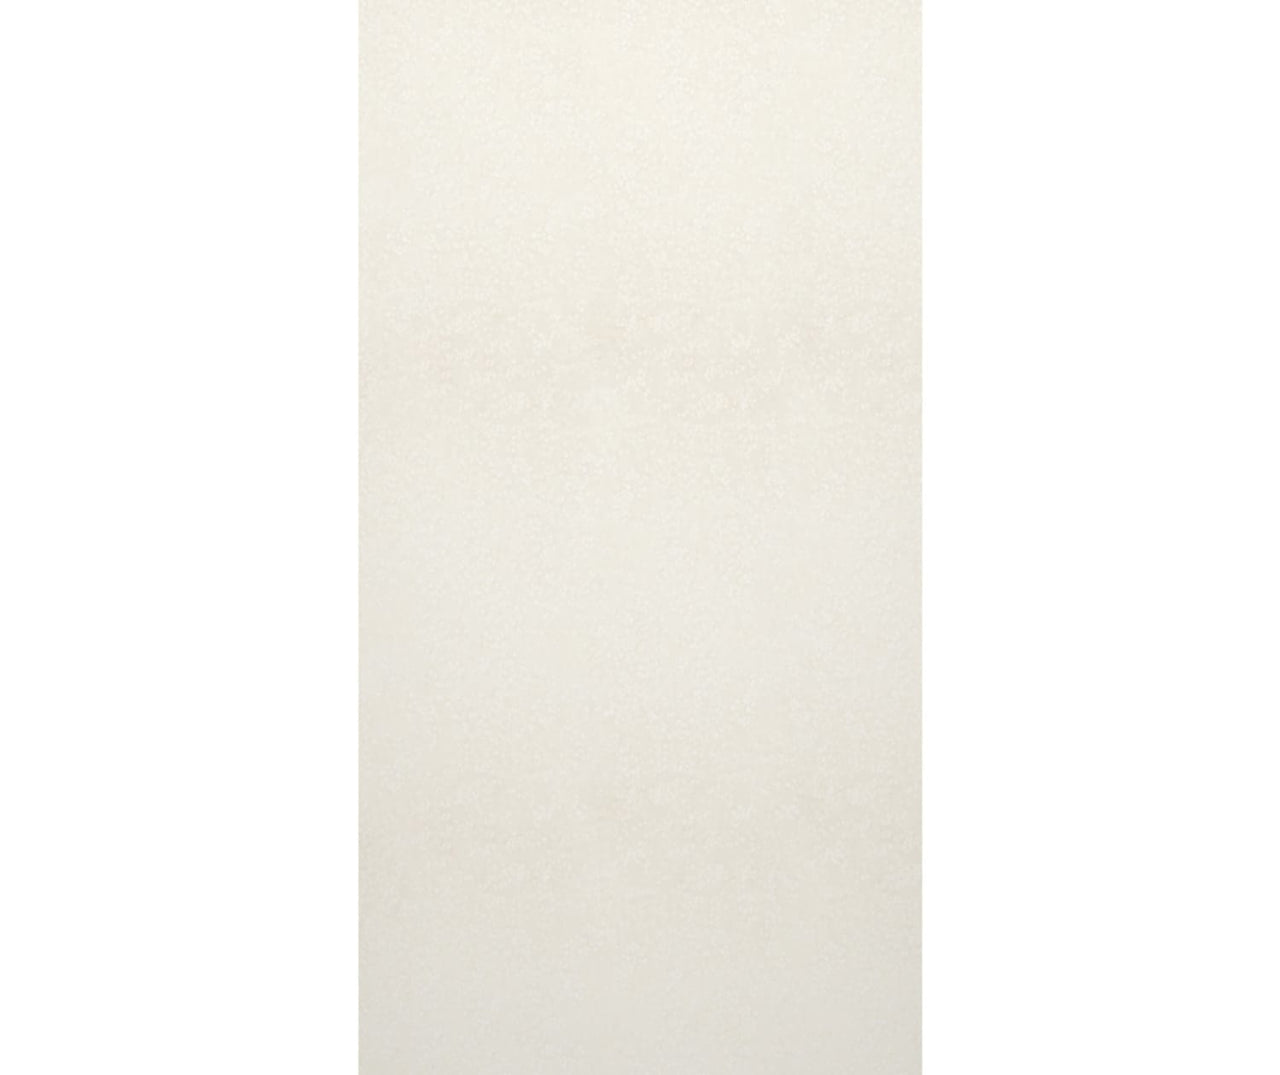 SMMK-7262-1 62 x 72 Swanstone Smooth Tile Glue up Bathtub and Shower Single Wall Panel  - BNGBath